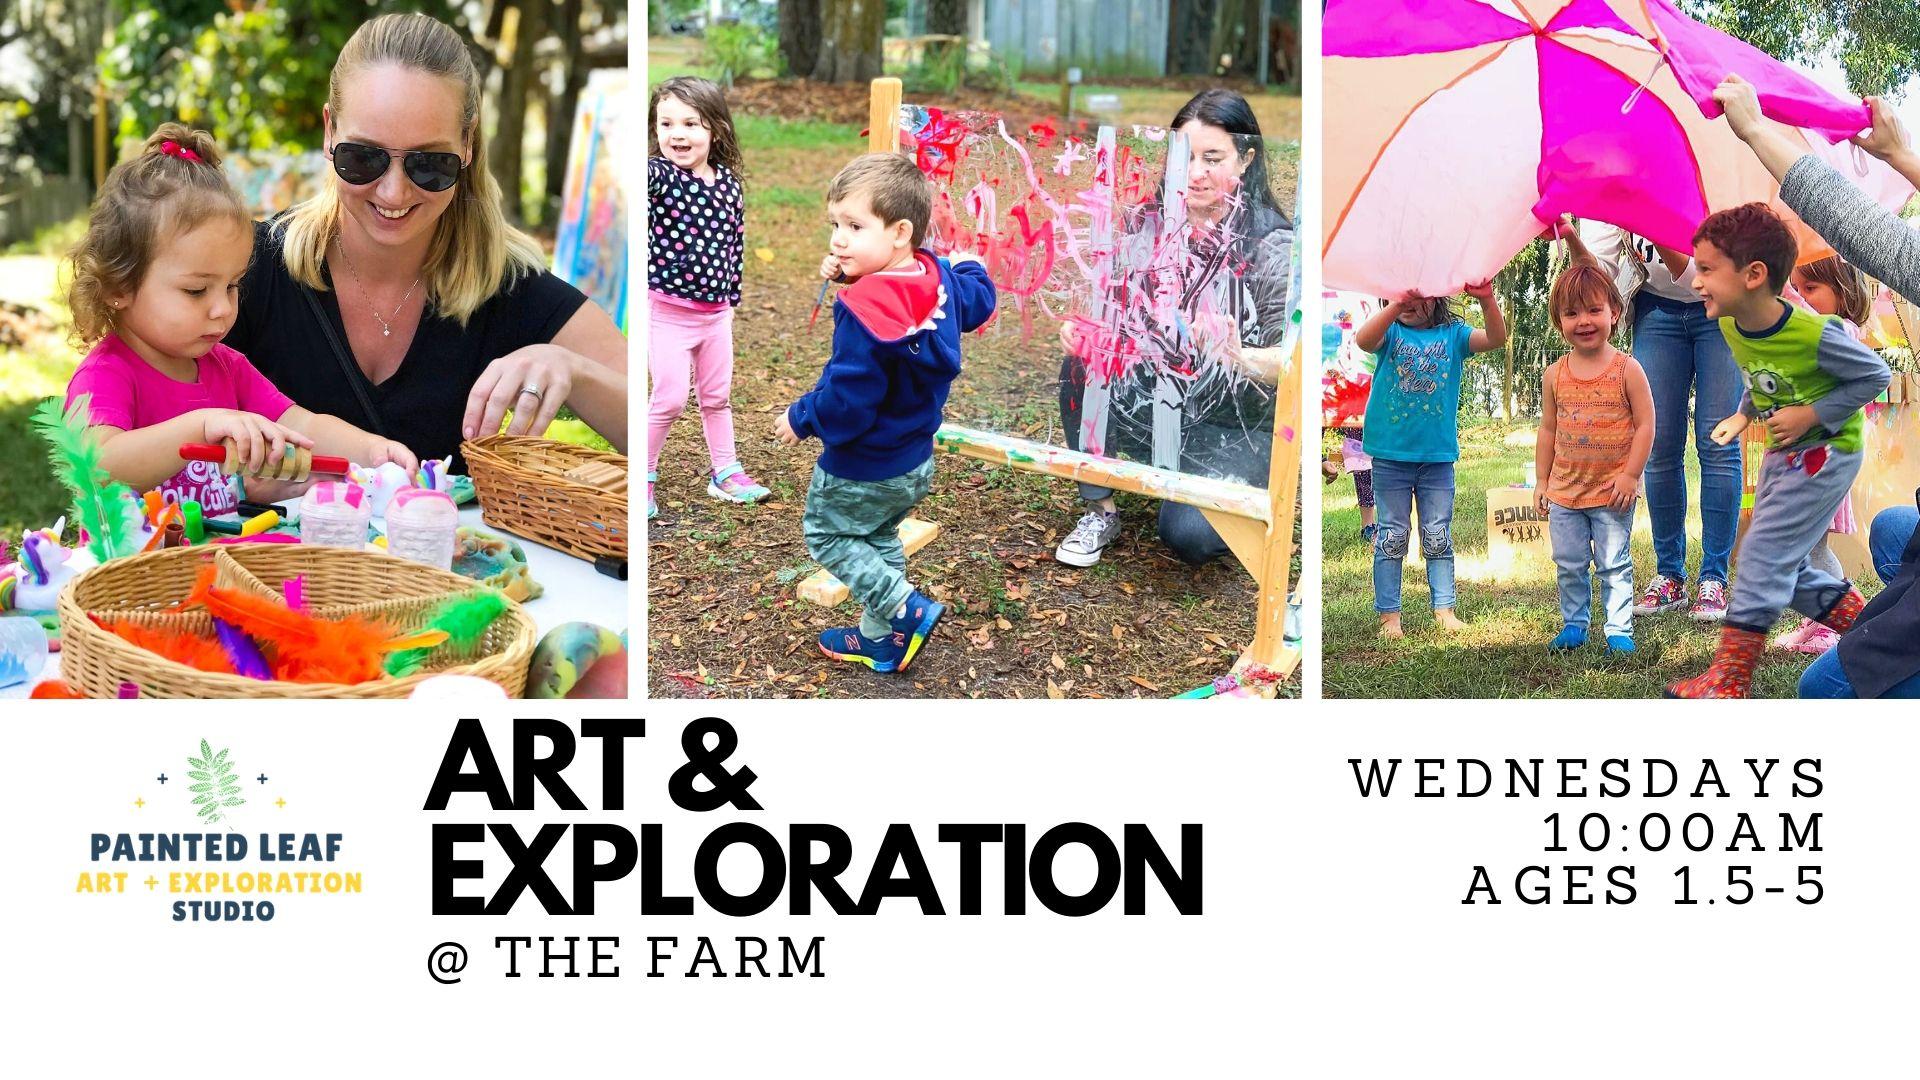 Art & Exploration @ the Farm